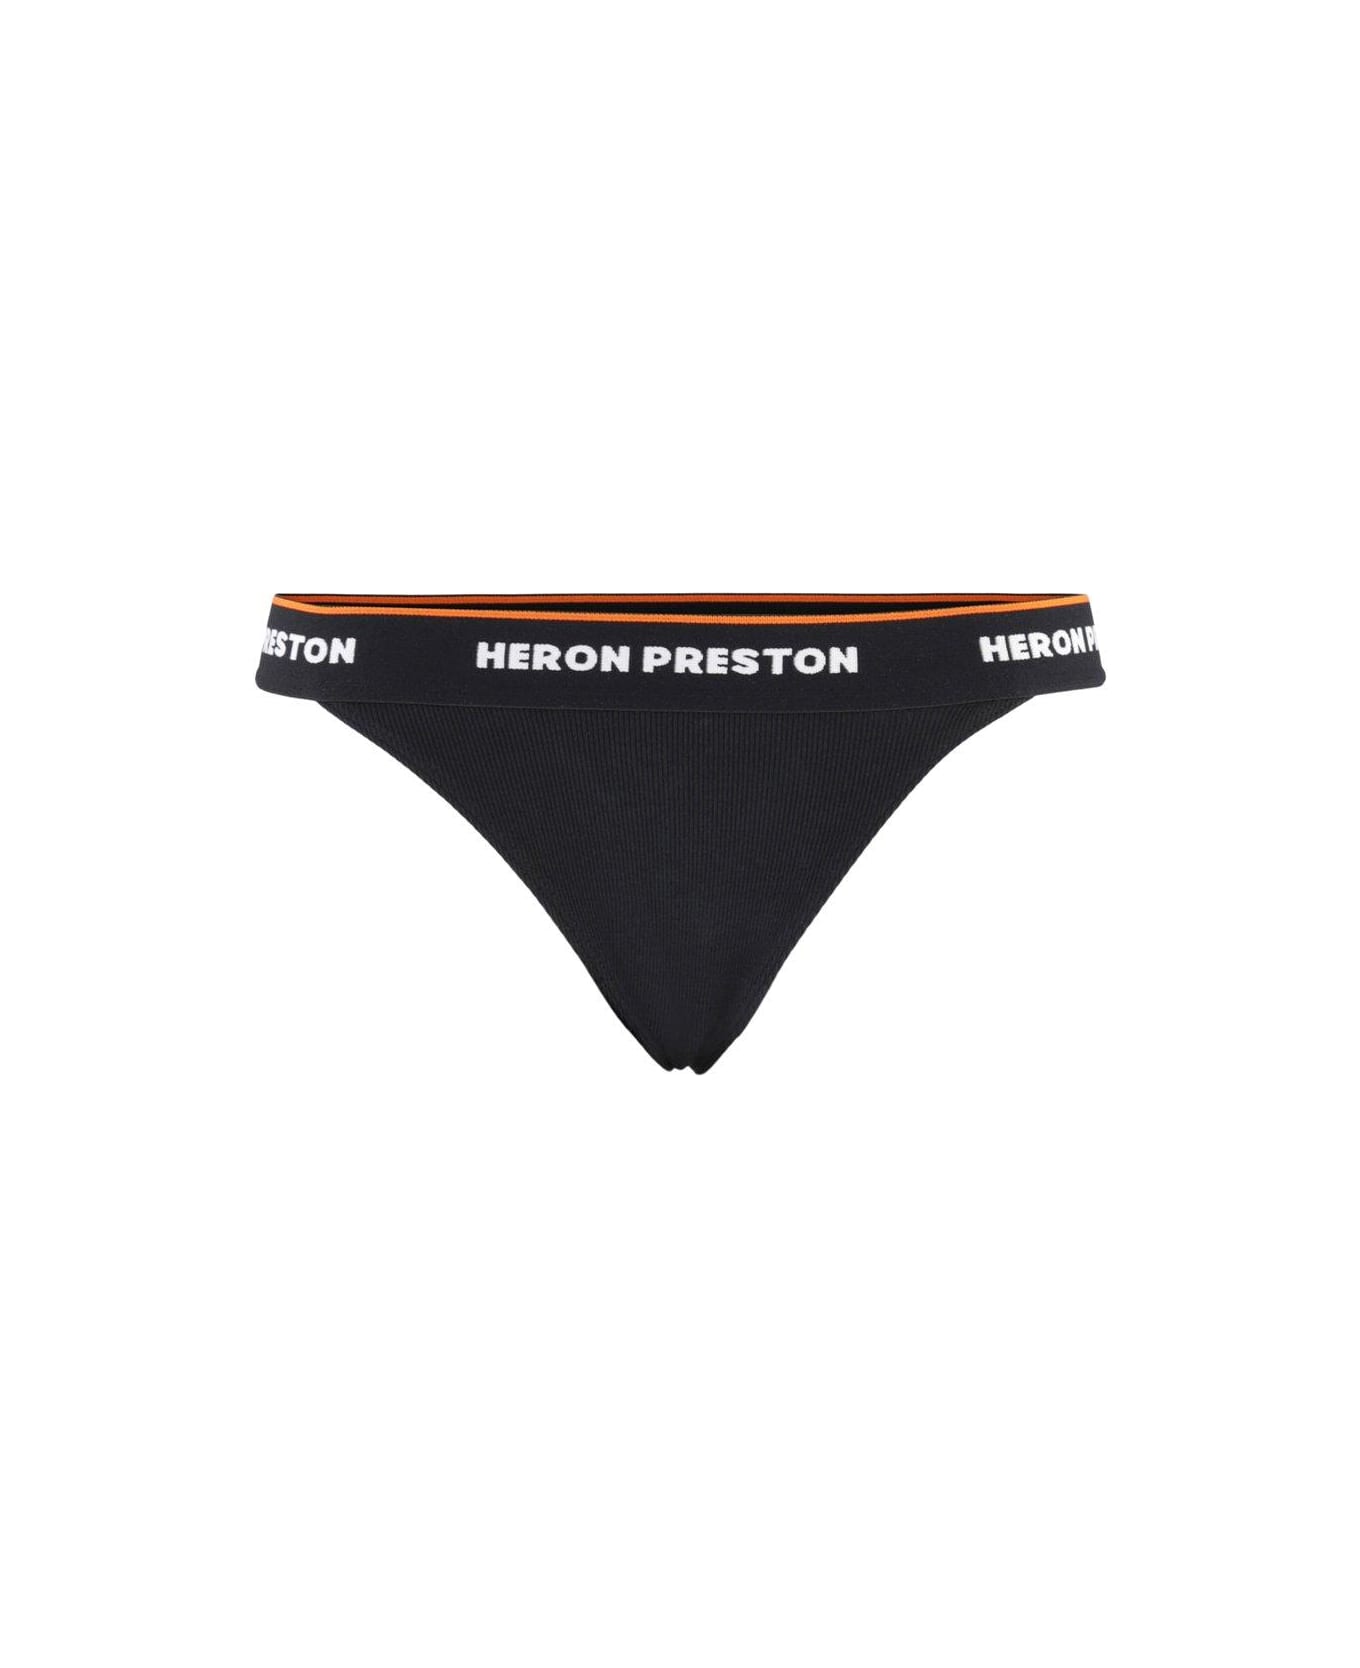 HERON PRESTON 'thong Logo' Cotton Briefs - BLACK